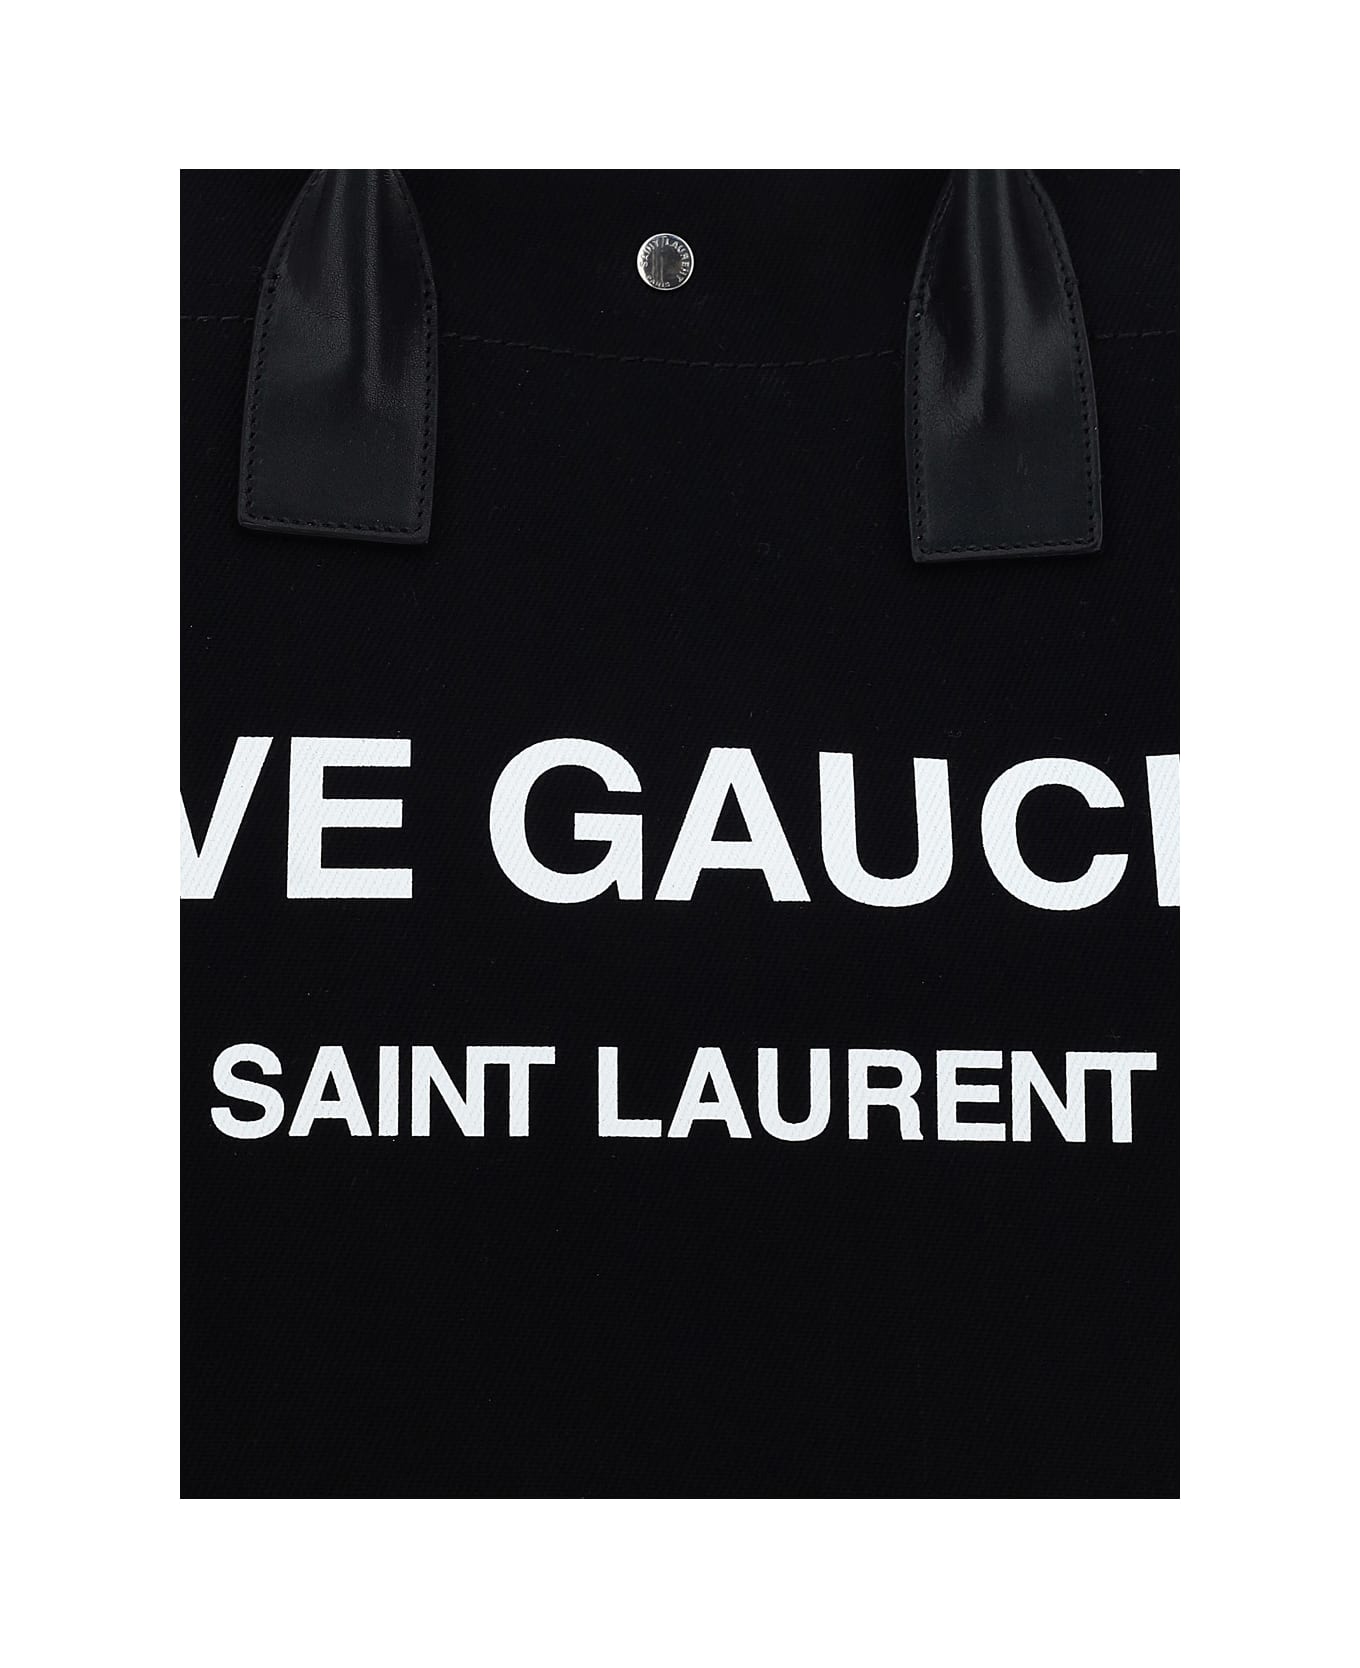 Saint Laurent Rive Gauche Tote Bag - Nero/bianco/nero/n トートバッグ